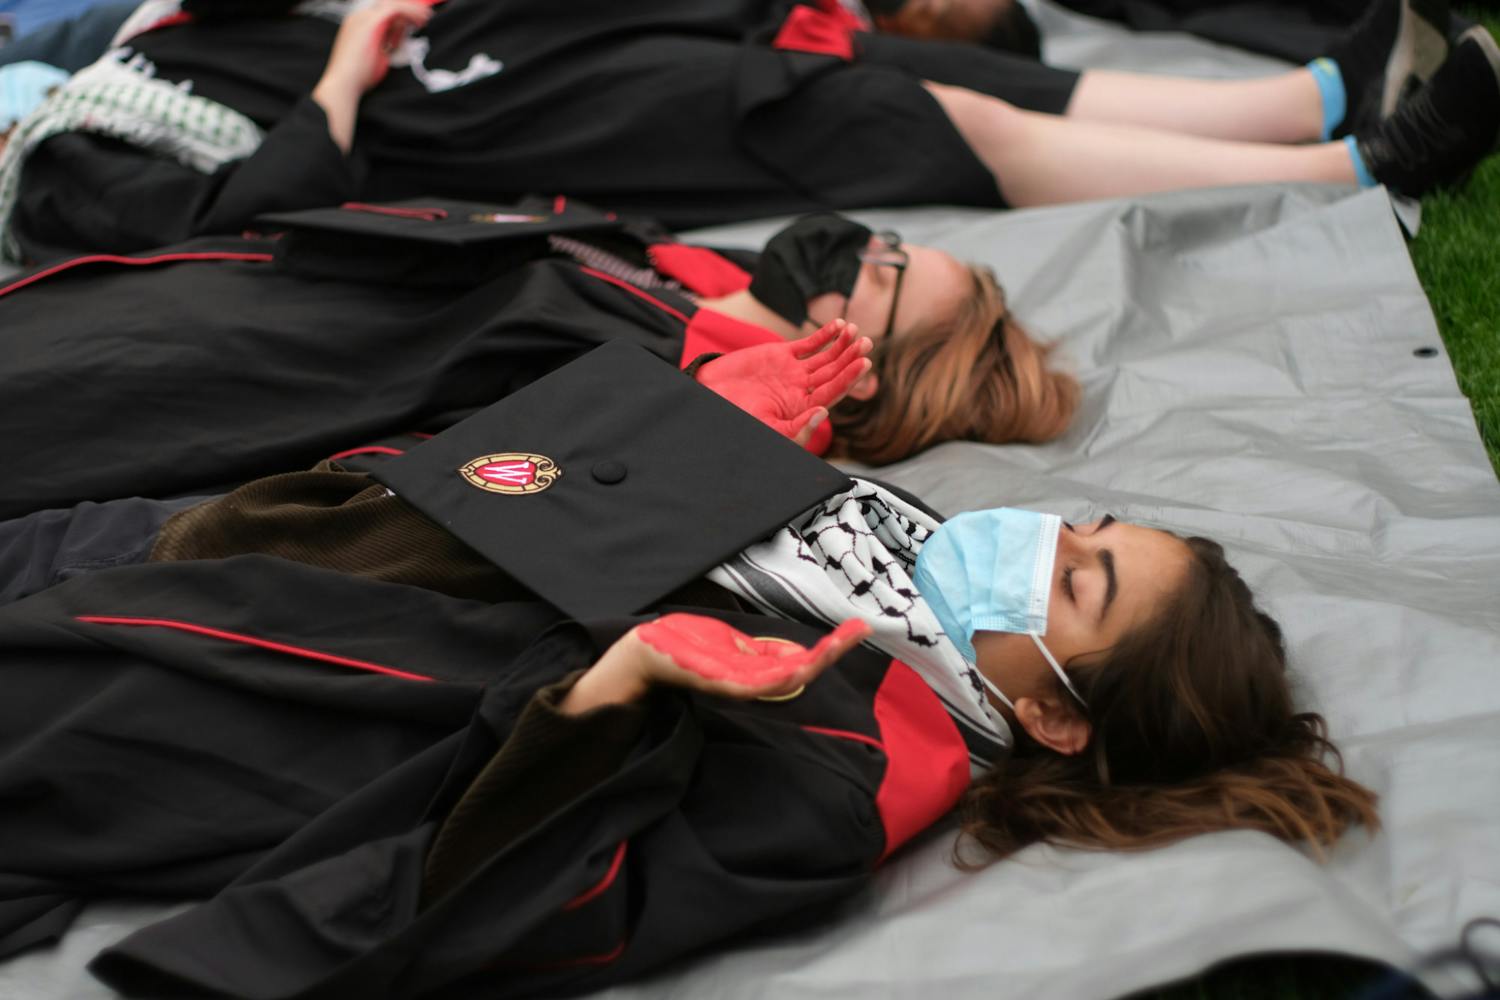 PHOTOS: 'Die-in' at Bascom Hall, pro-Palestine encampment day 11